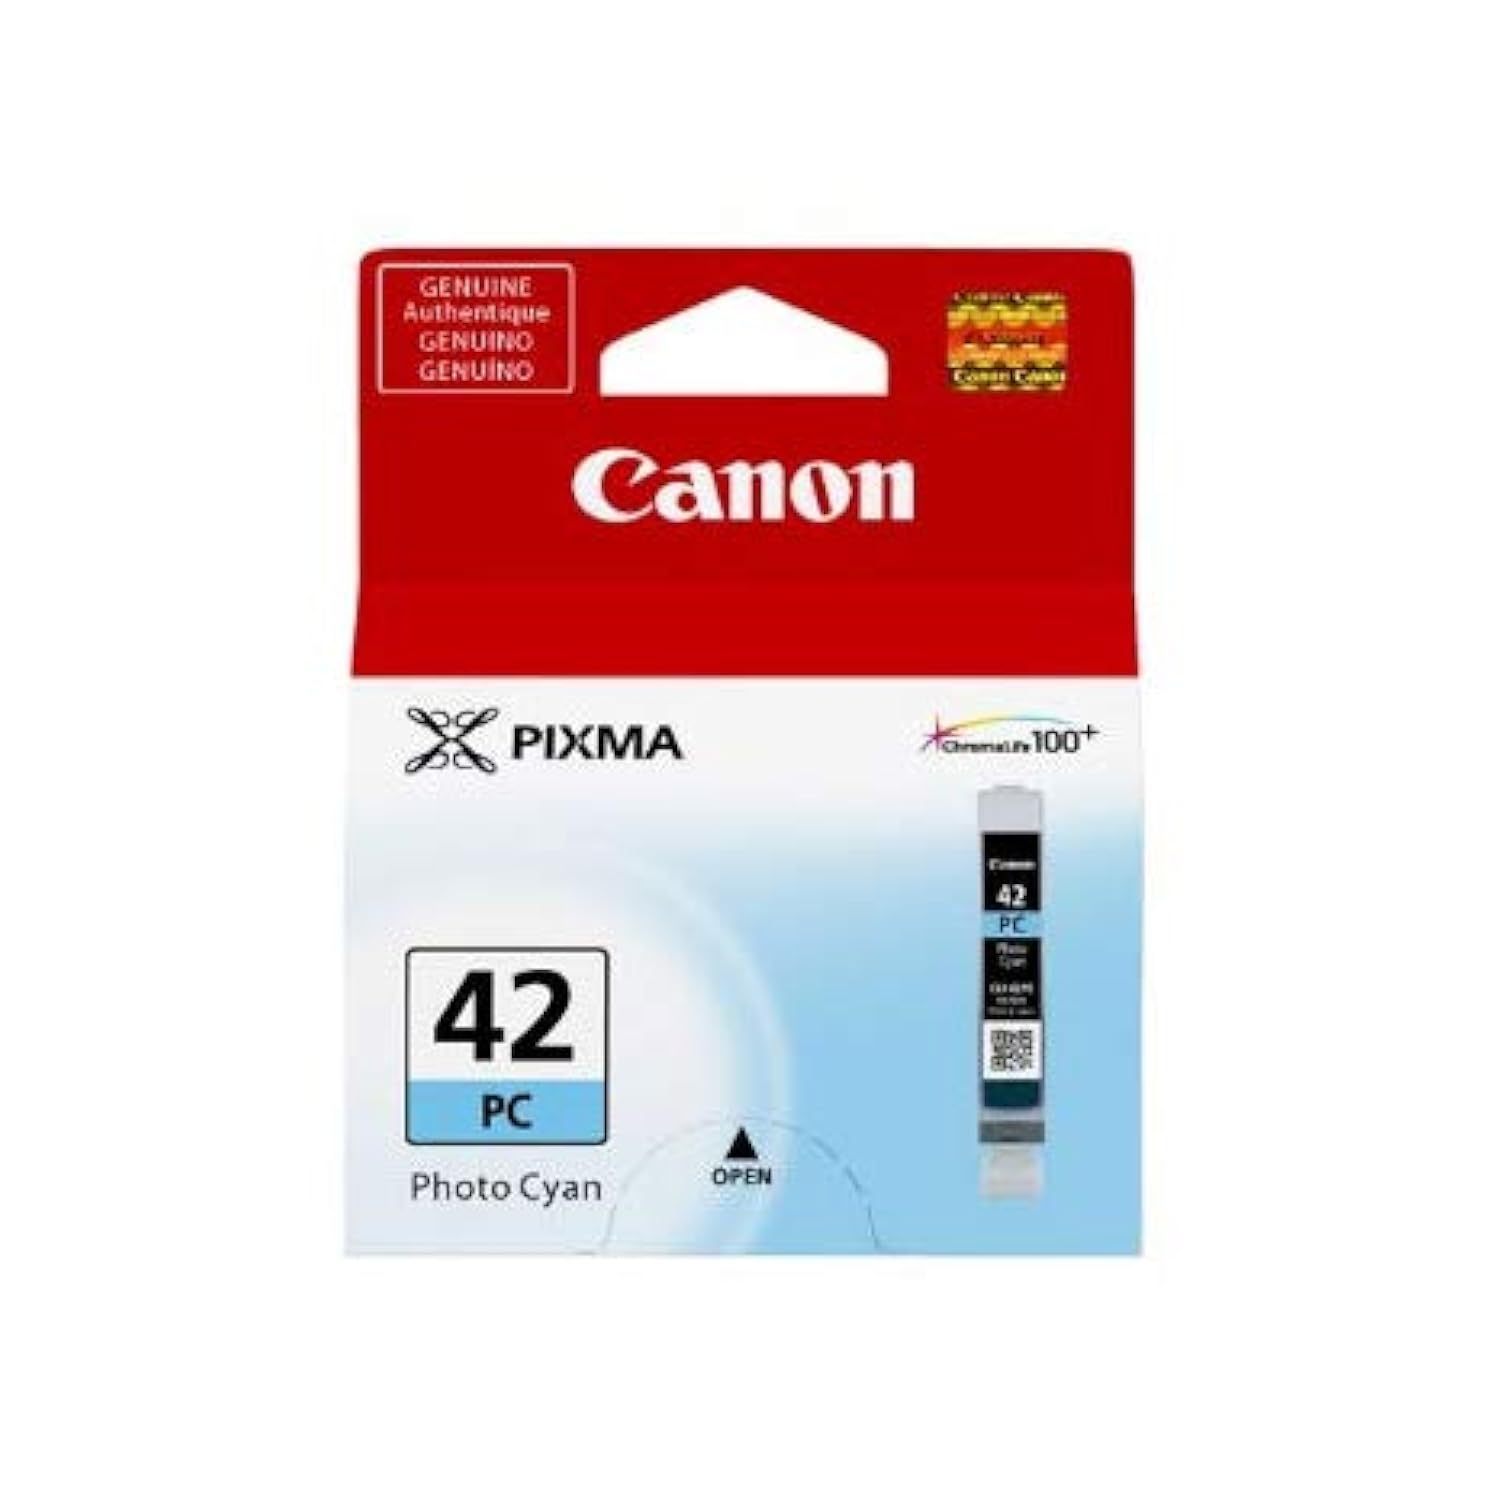 Canon 6388B002 CLI-42 PHOTO CYAN INK TANK - CARTRIDGE - FOR PIXMA PRO-100 INKJET PHOTO PRINTER